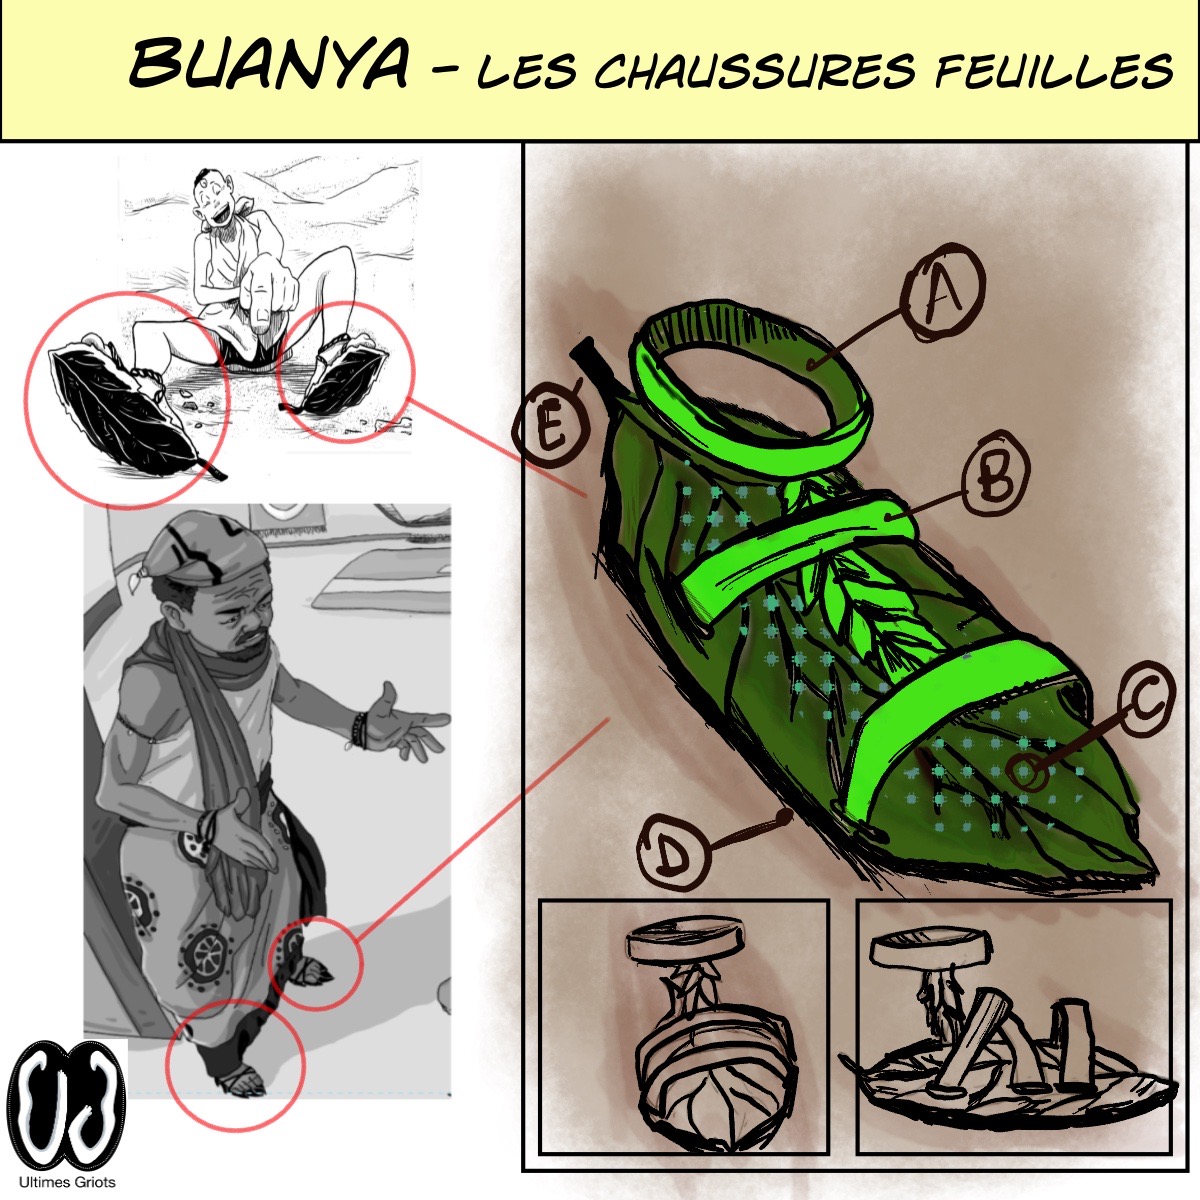 buanya-chaussures-feuilles-de-kama